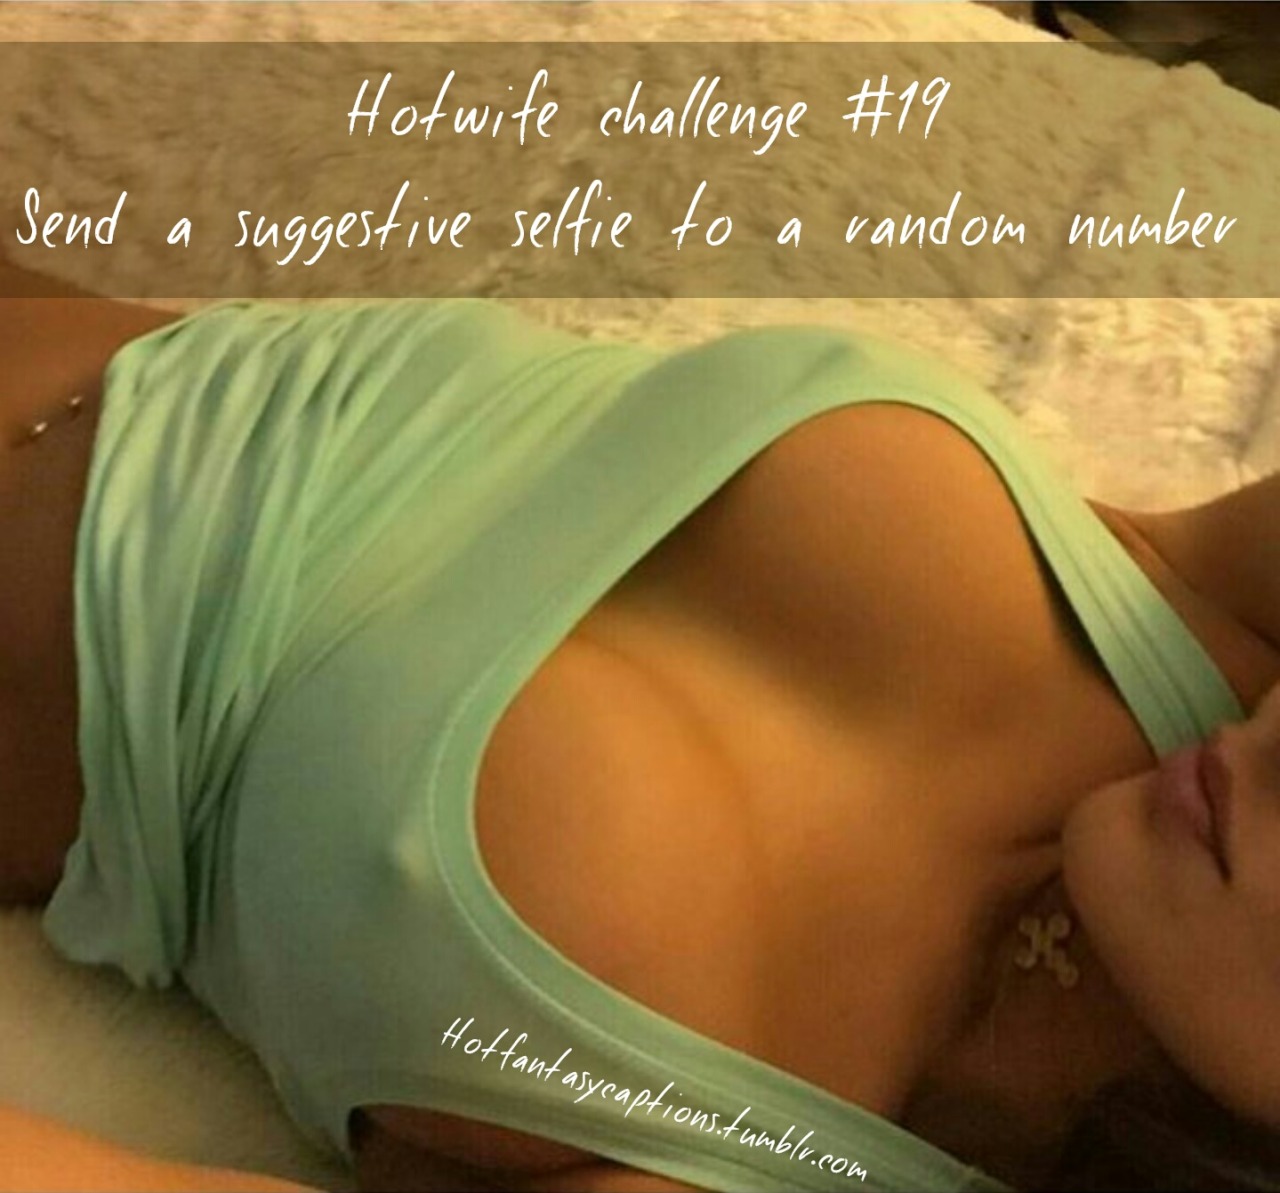 Hotwife challenge #19 - Send a suggestive selfie